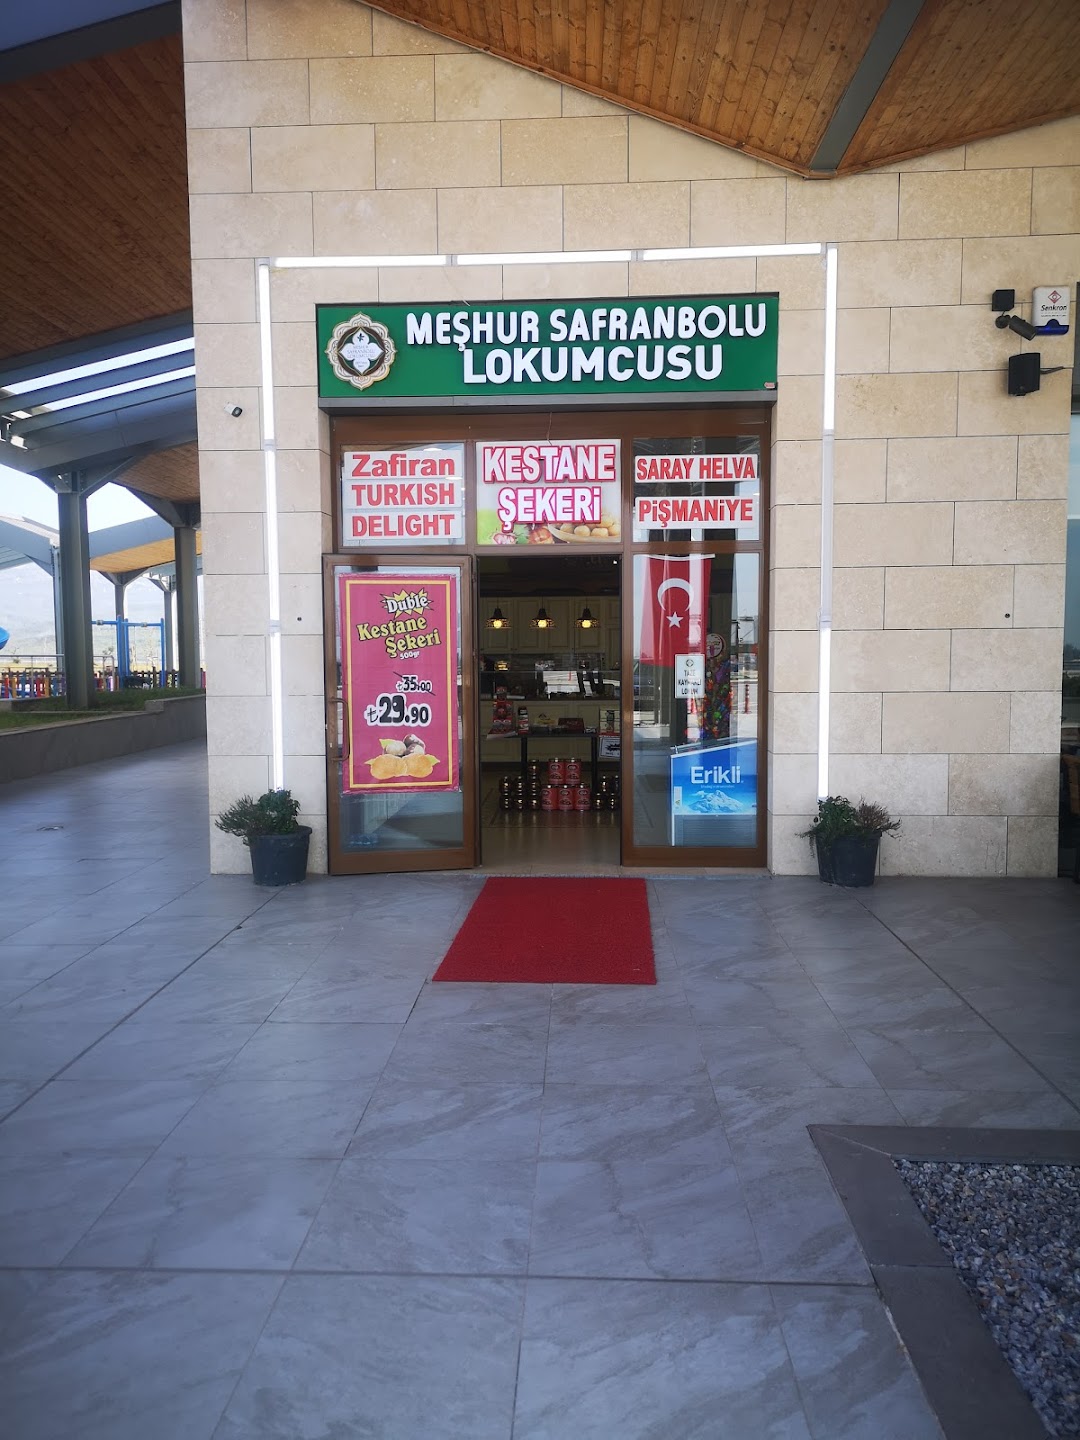 Mehur Safranbolu Lokumcusu